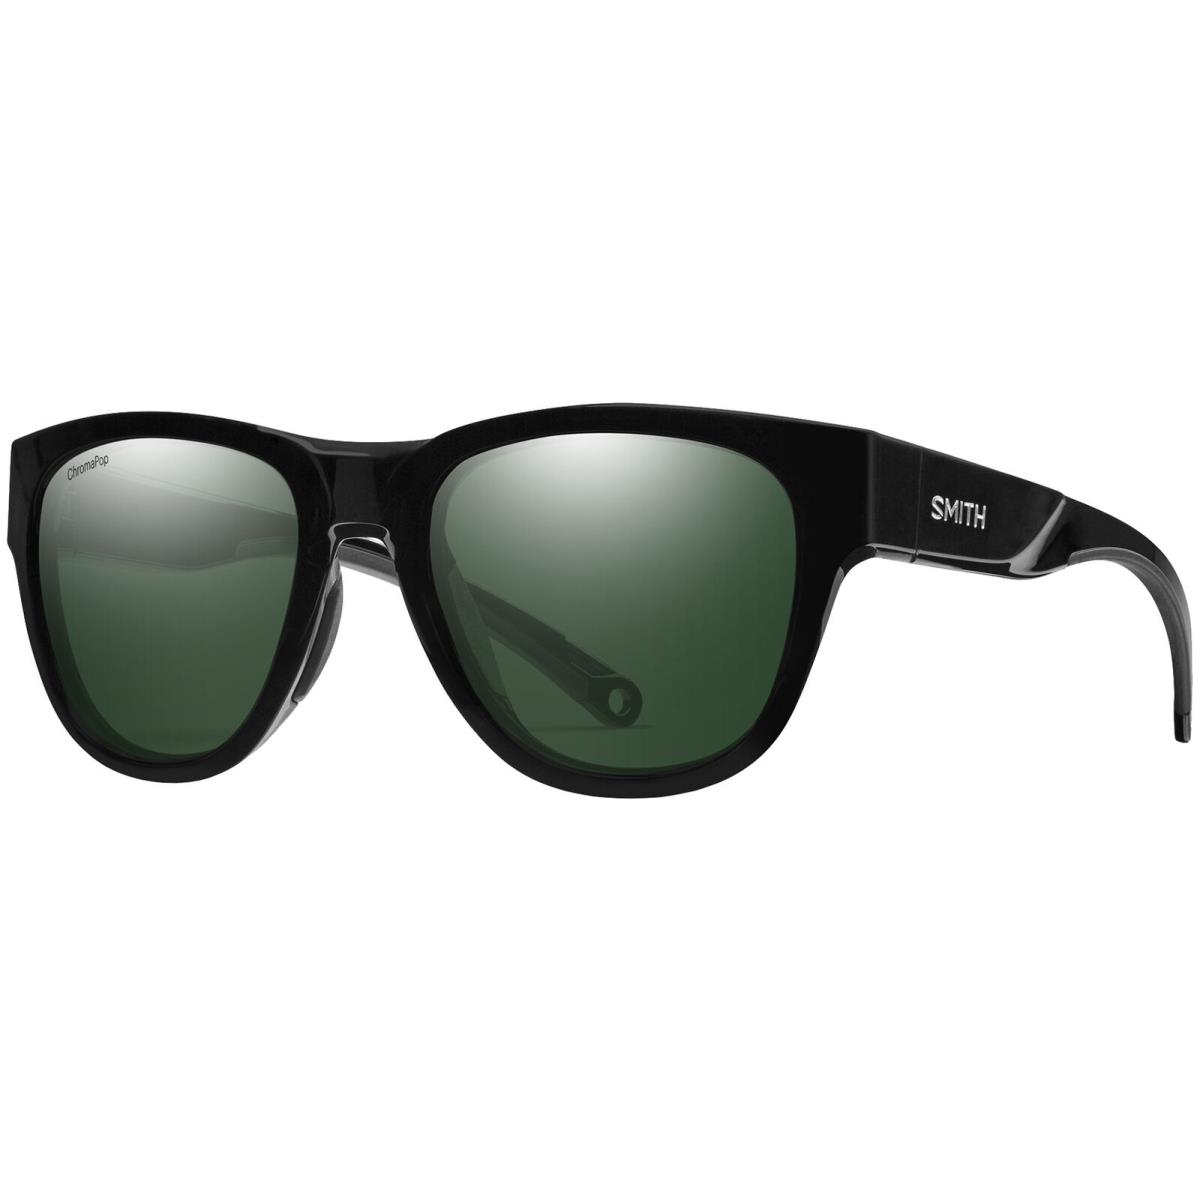 Smith Optics Rockaway Polarized Chromapop Round Sport Sunglasses 204316 Taiwan Black/Gray Green (80752L7)